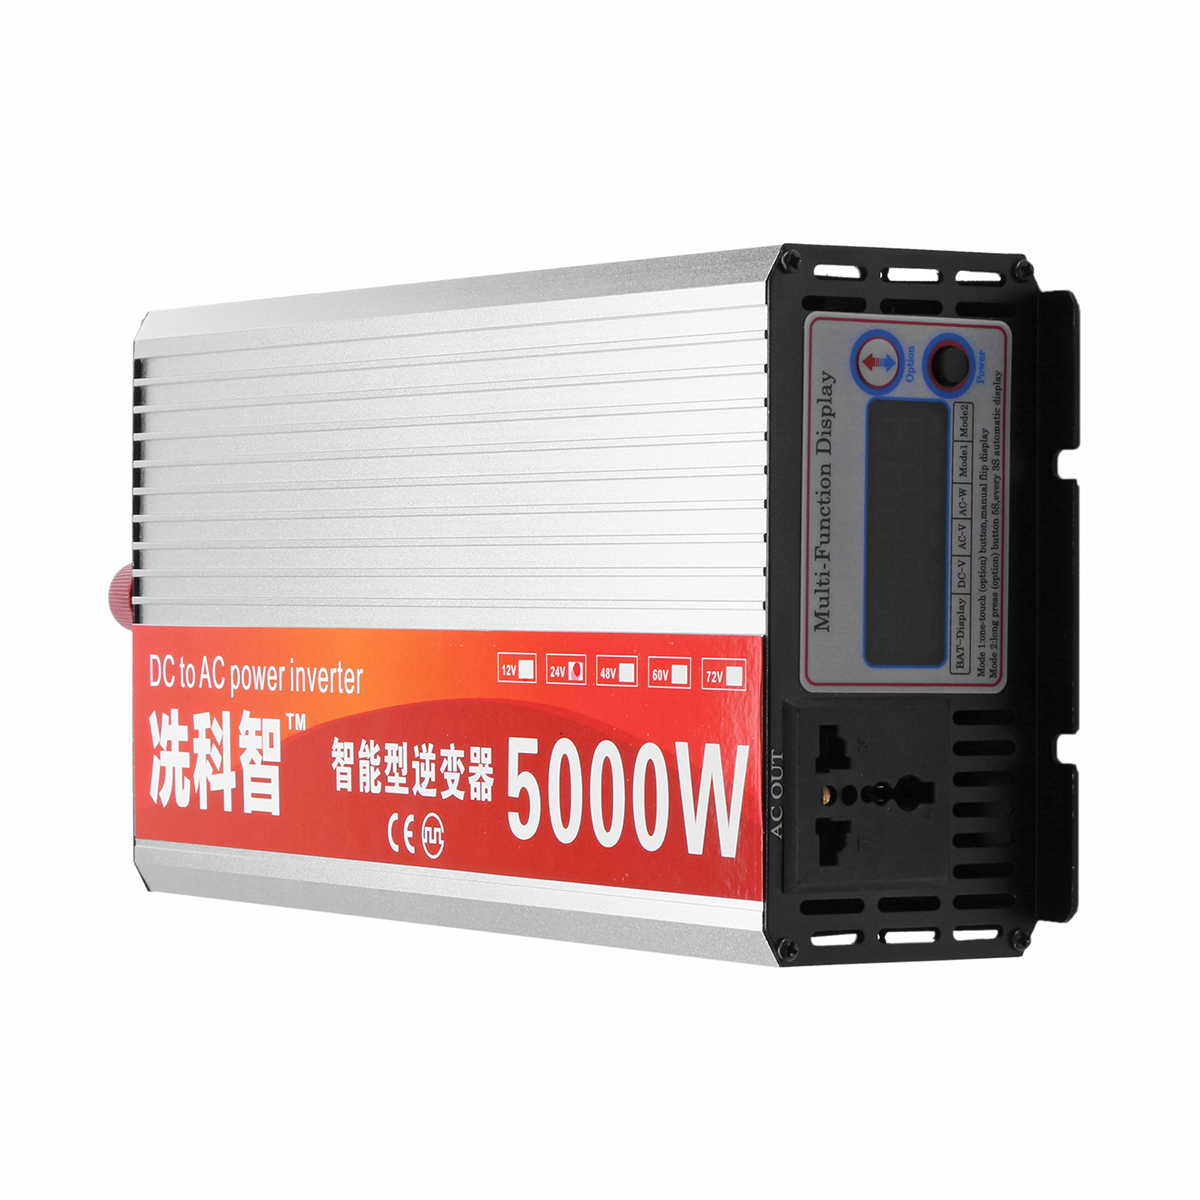 5000W Power Inverter